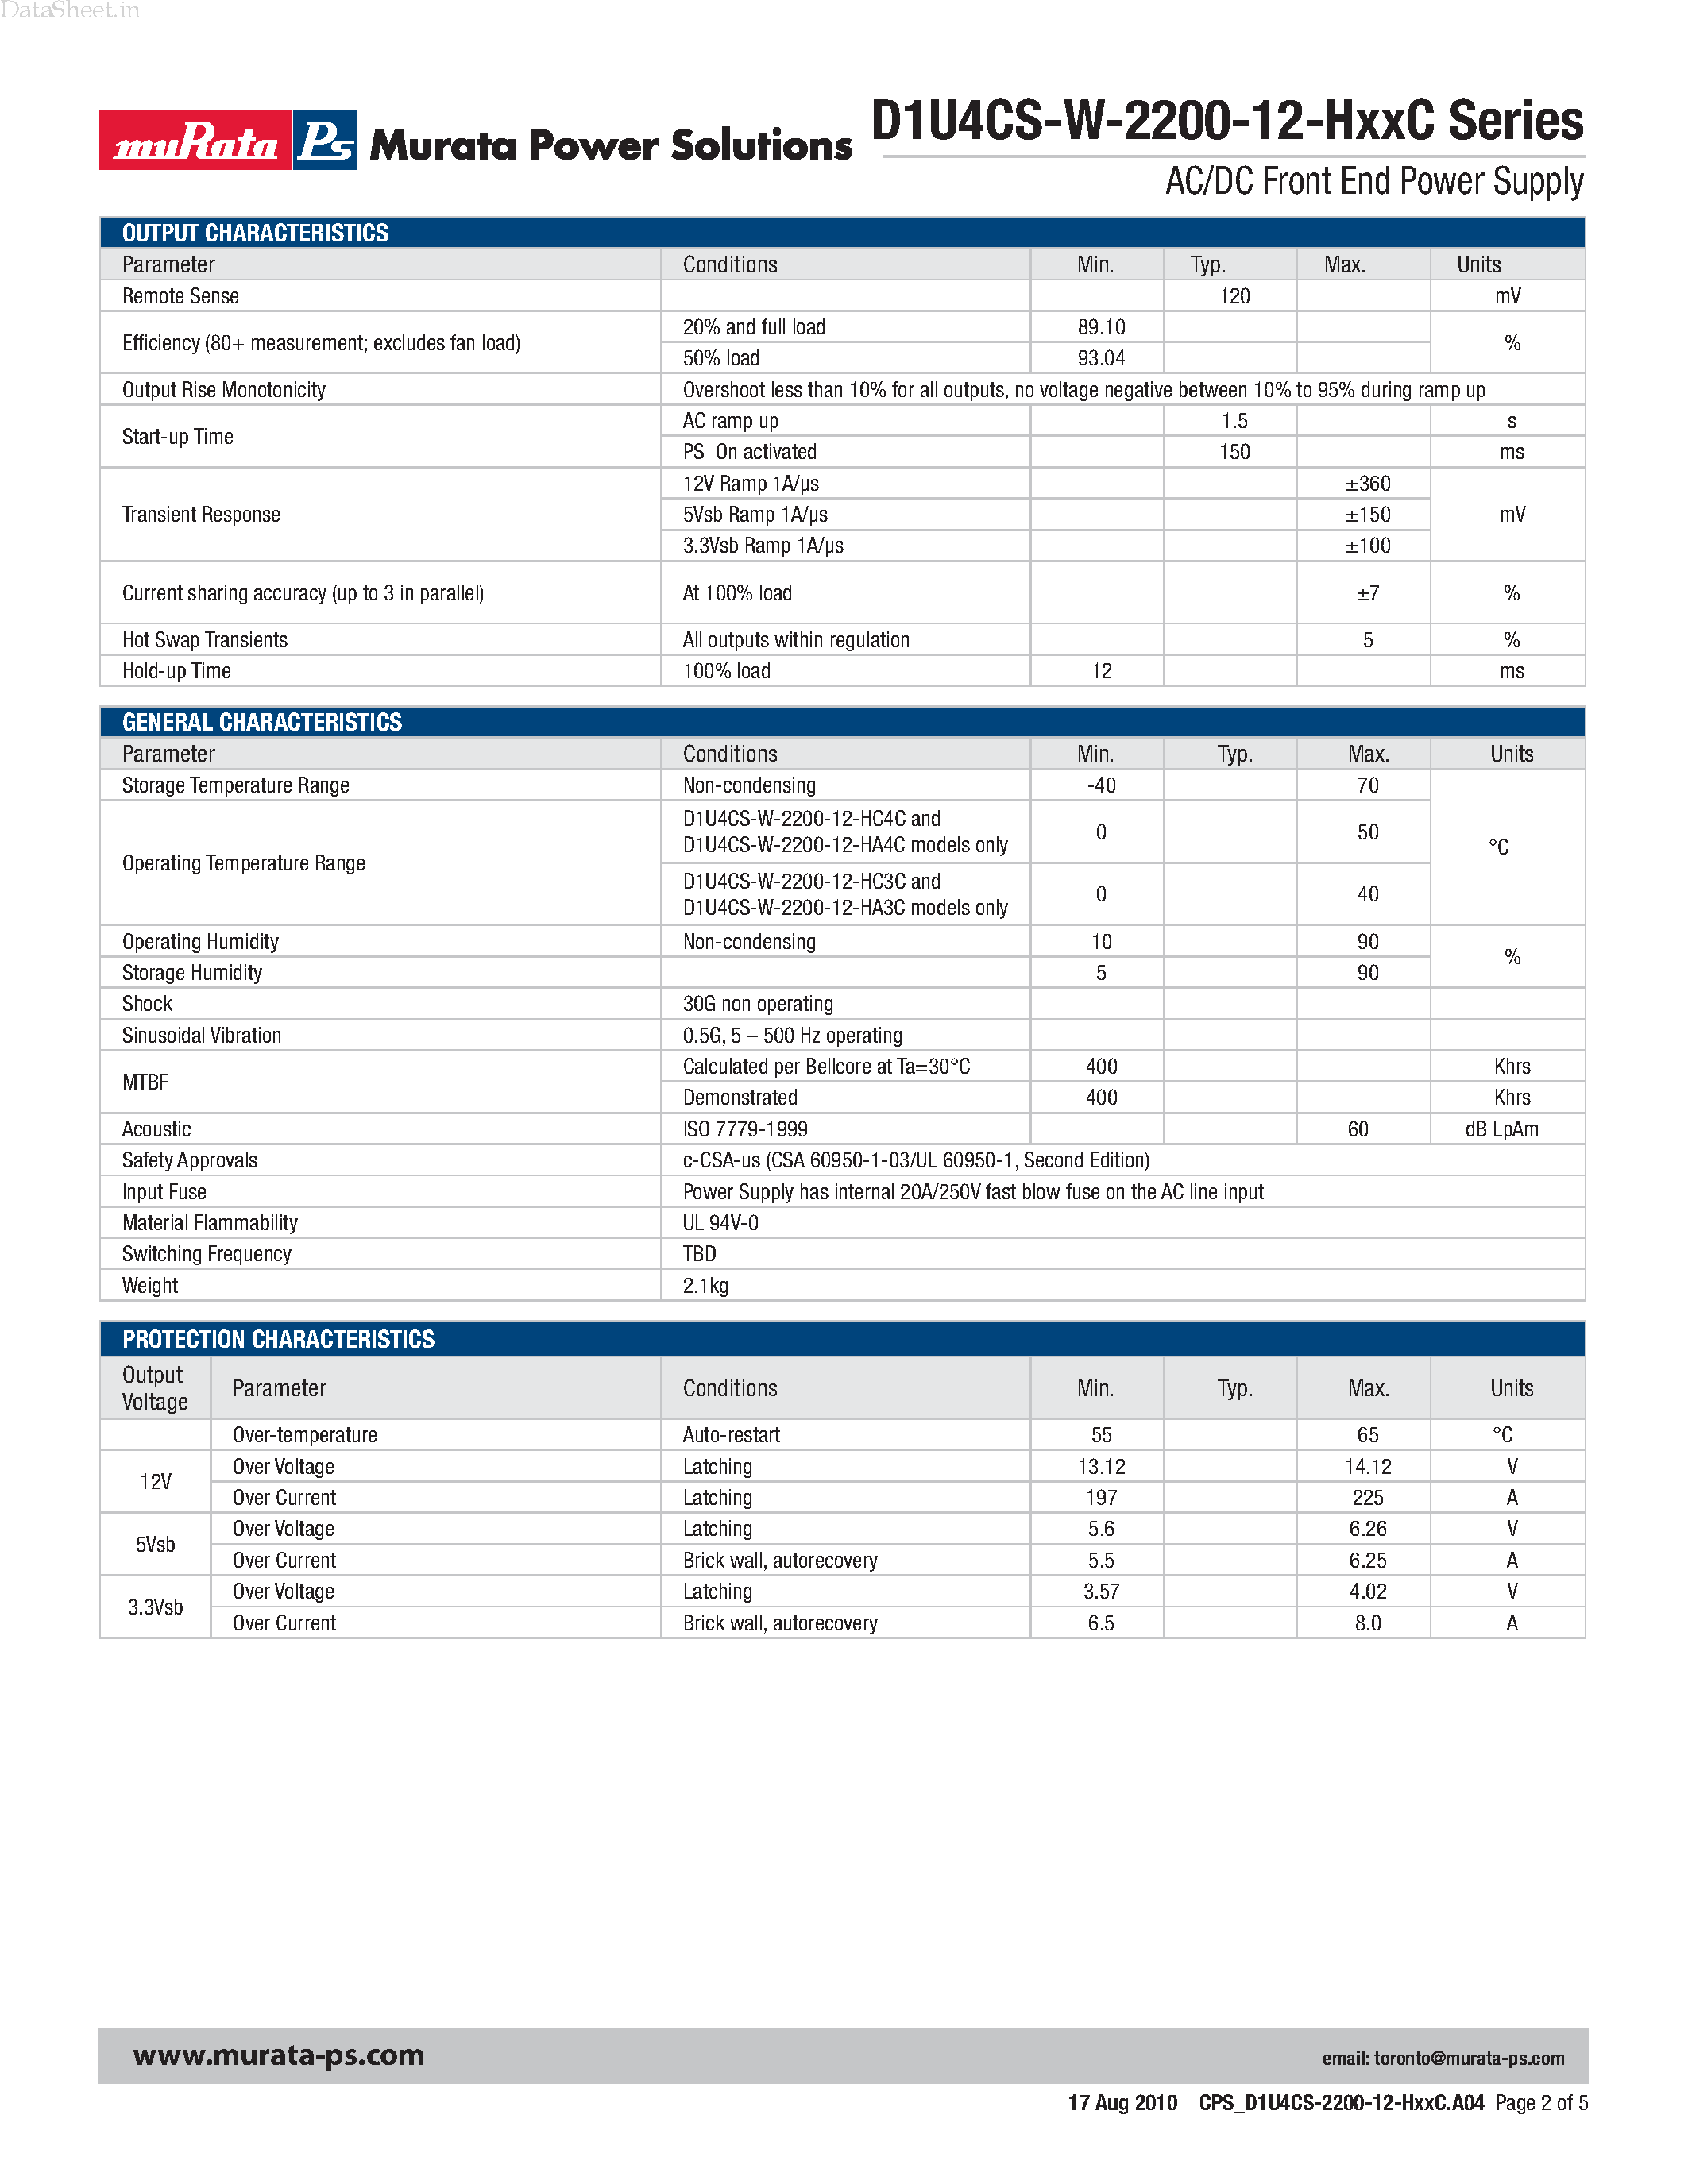 Datasheet D1U4CS-W-2200-12-HXXC - AC/DC Front End Power Supply page 2